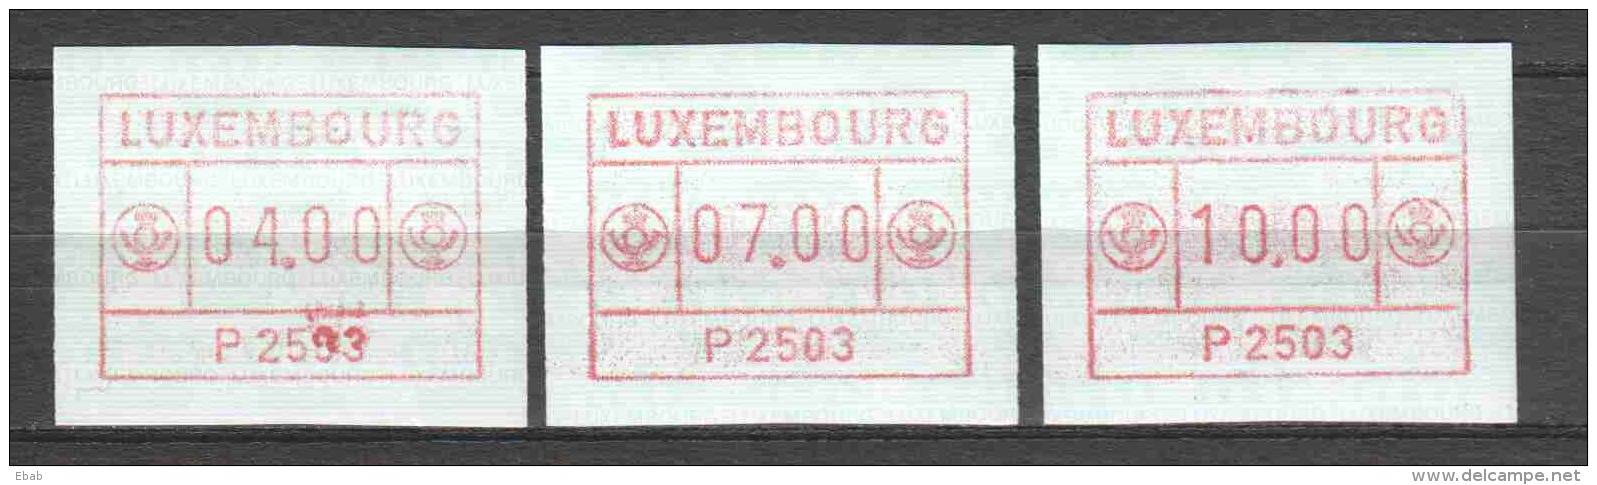 Luxemburg 1983 Automatmarken (2) - Postage Labels